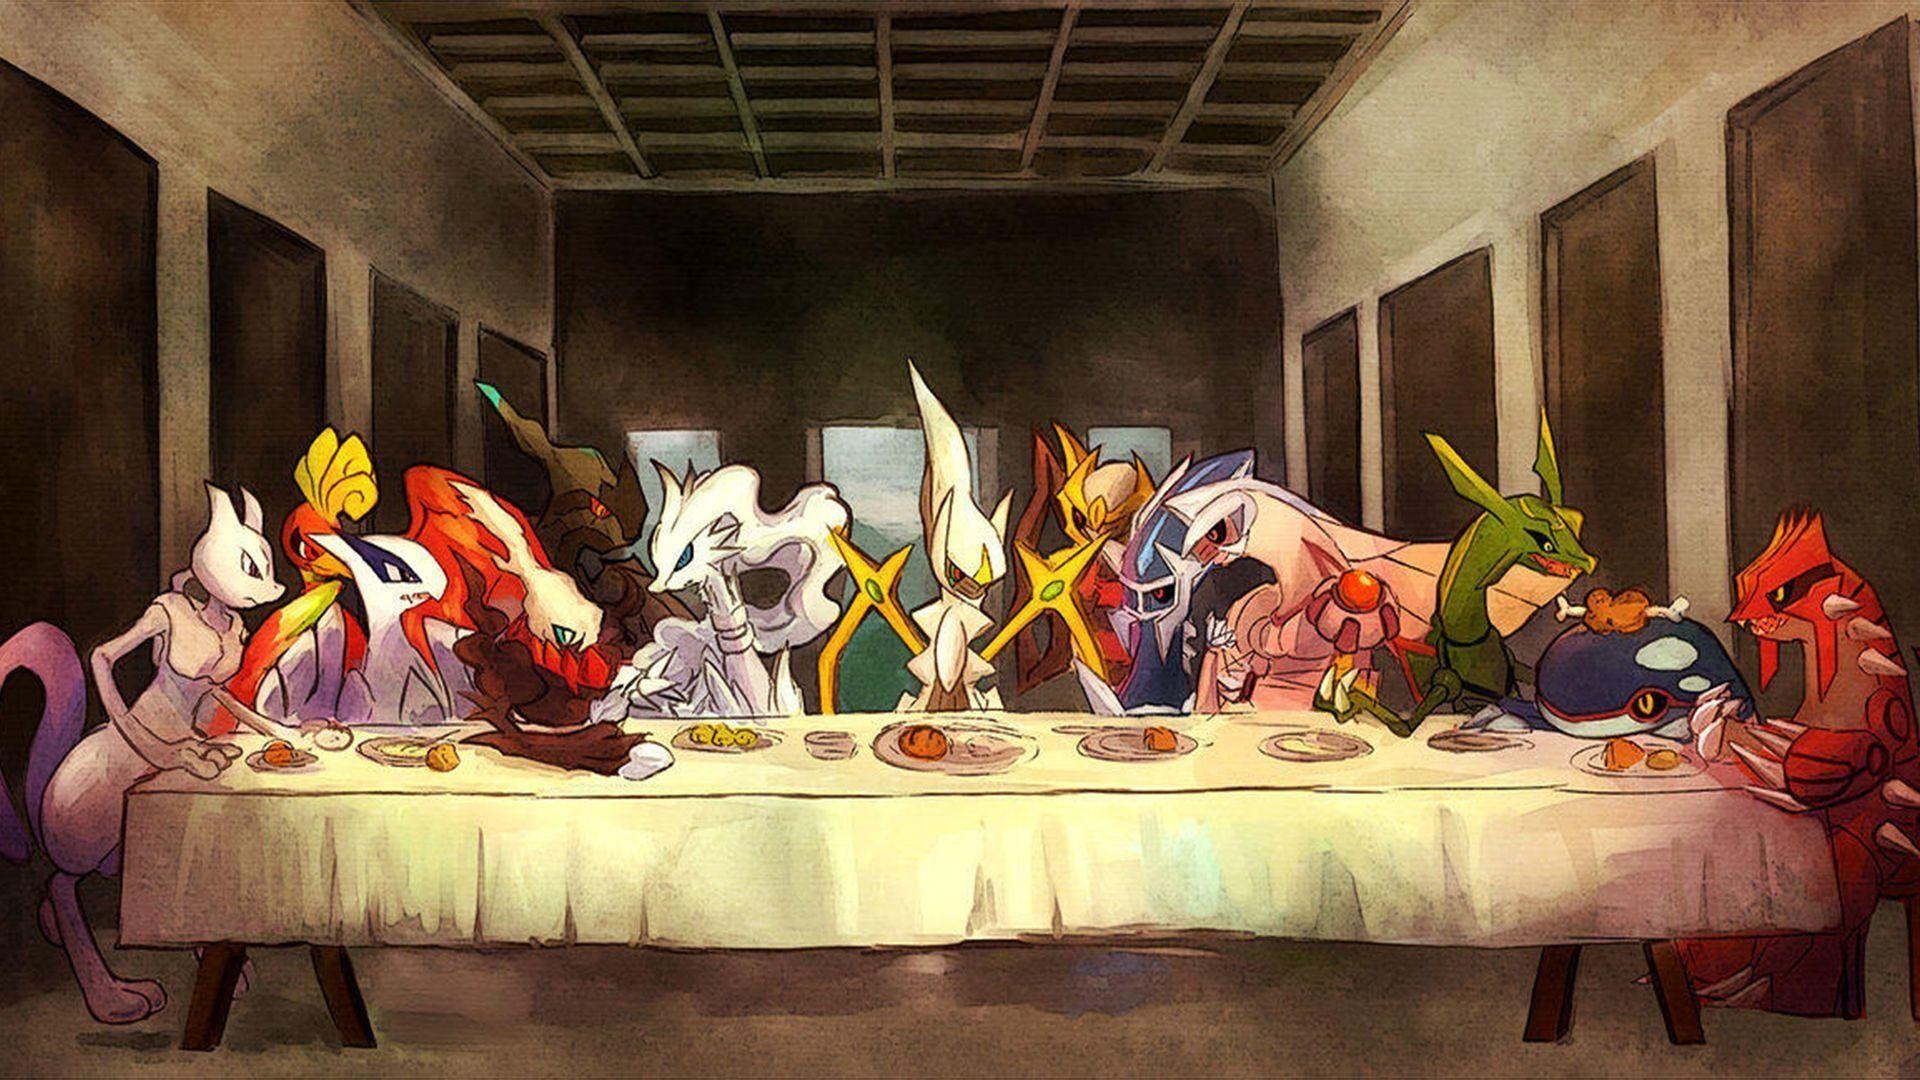 Darkrai (Pokémon) HD Wallpaper and Background Image